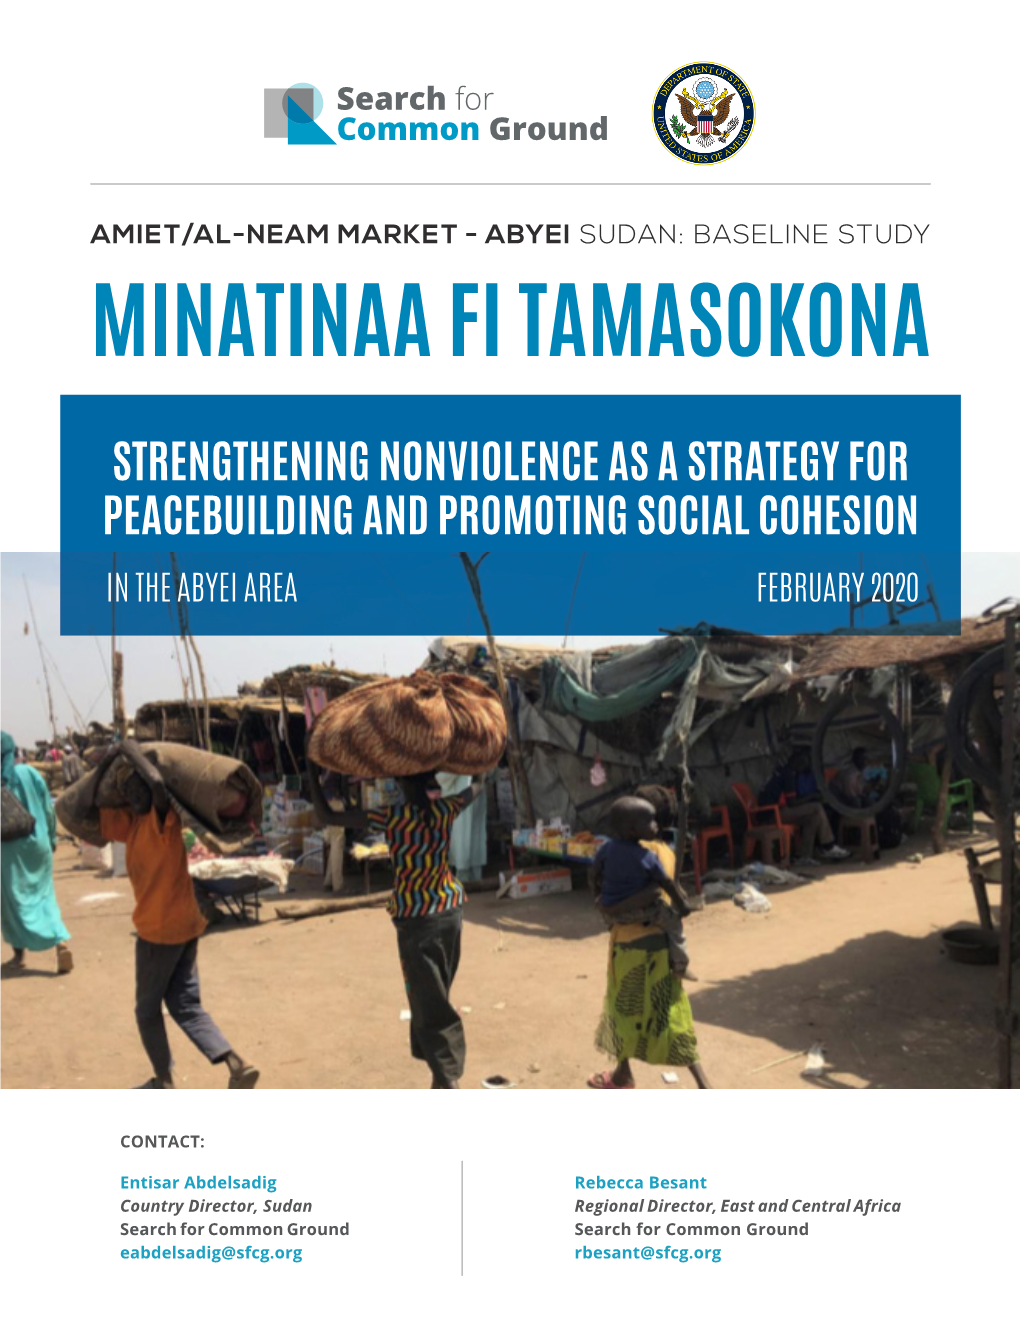 Abyei Sudan: Baseline Study Minatinaa Fi Tamasokona